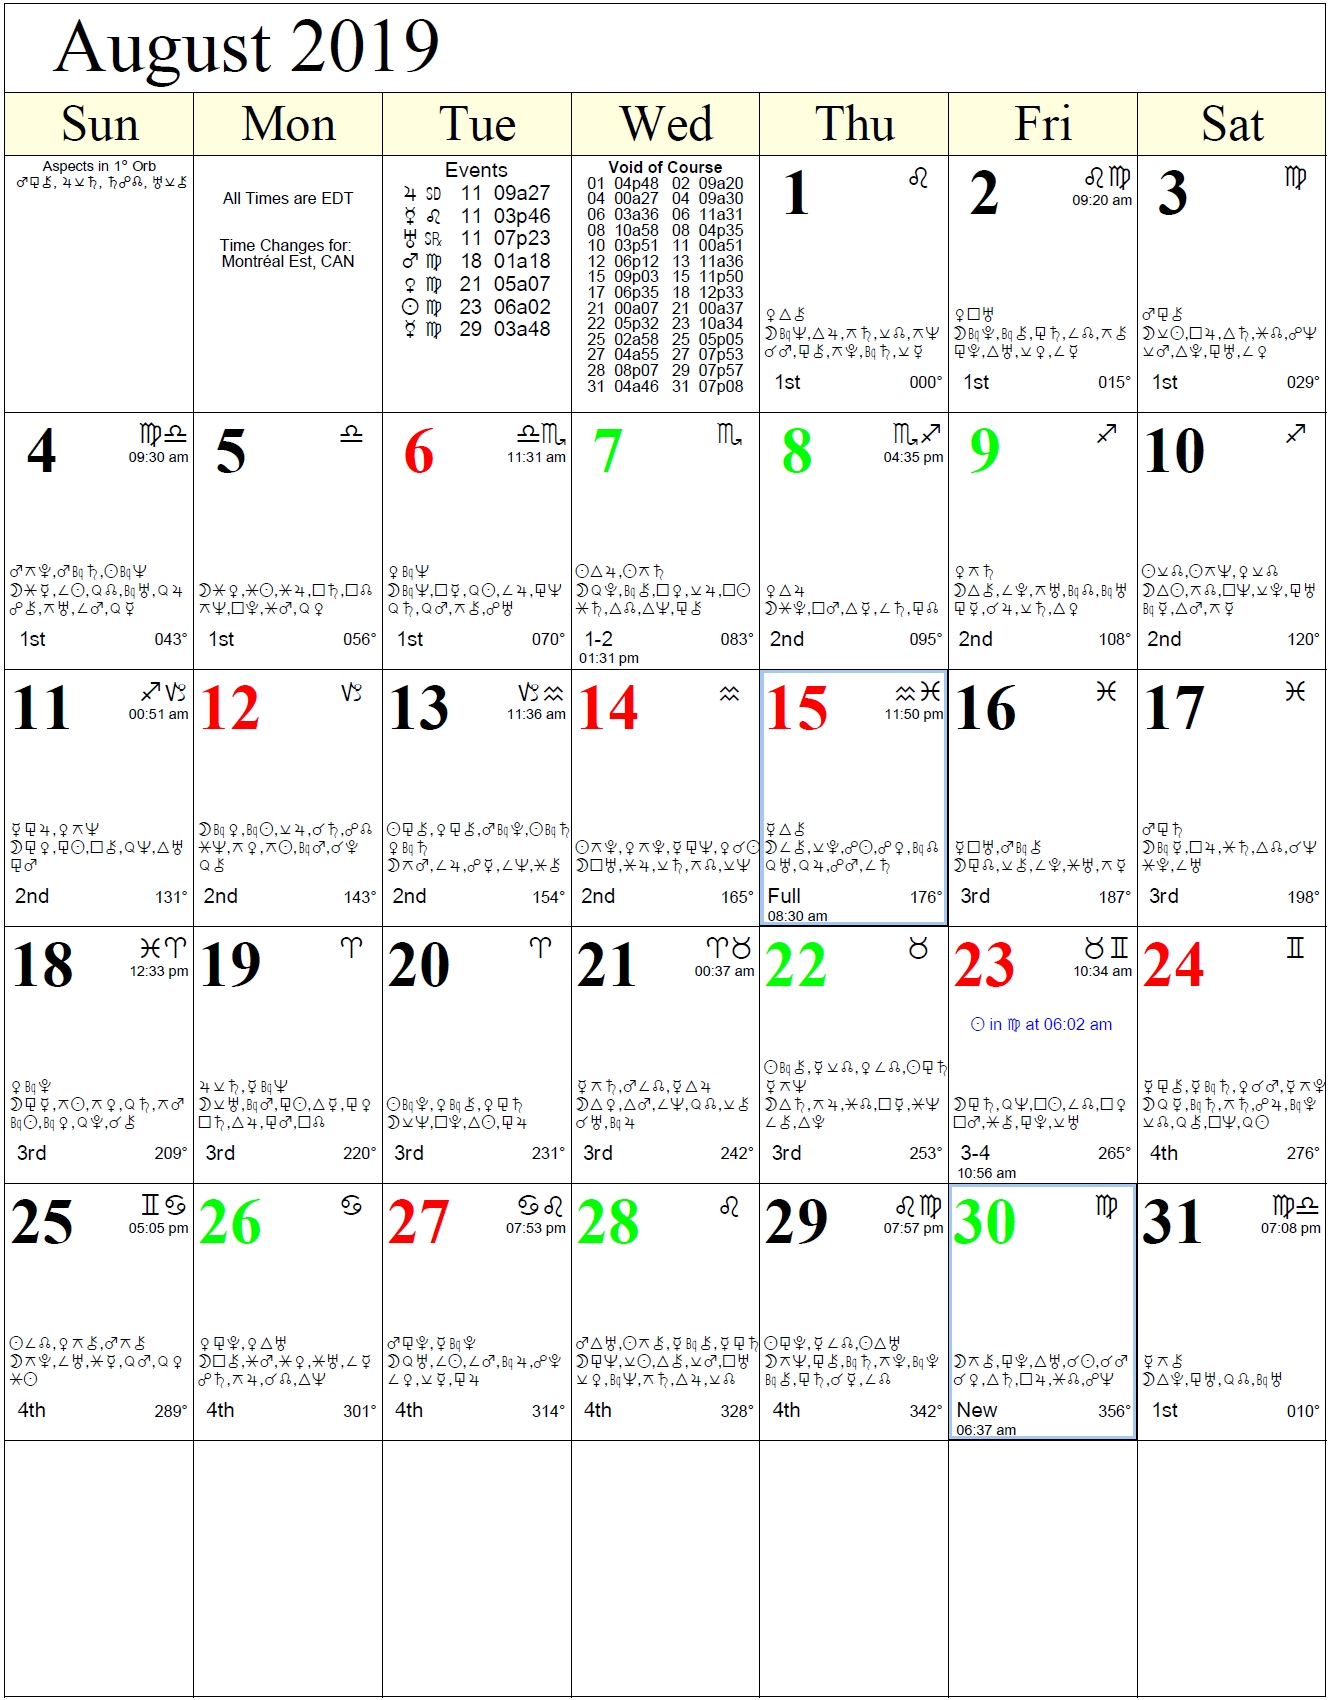 Monthly Astrology Calendars Lunar Calendar With Zodiac